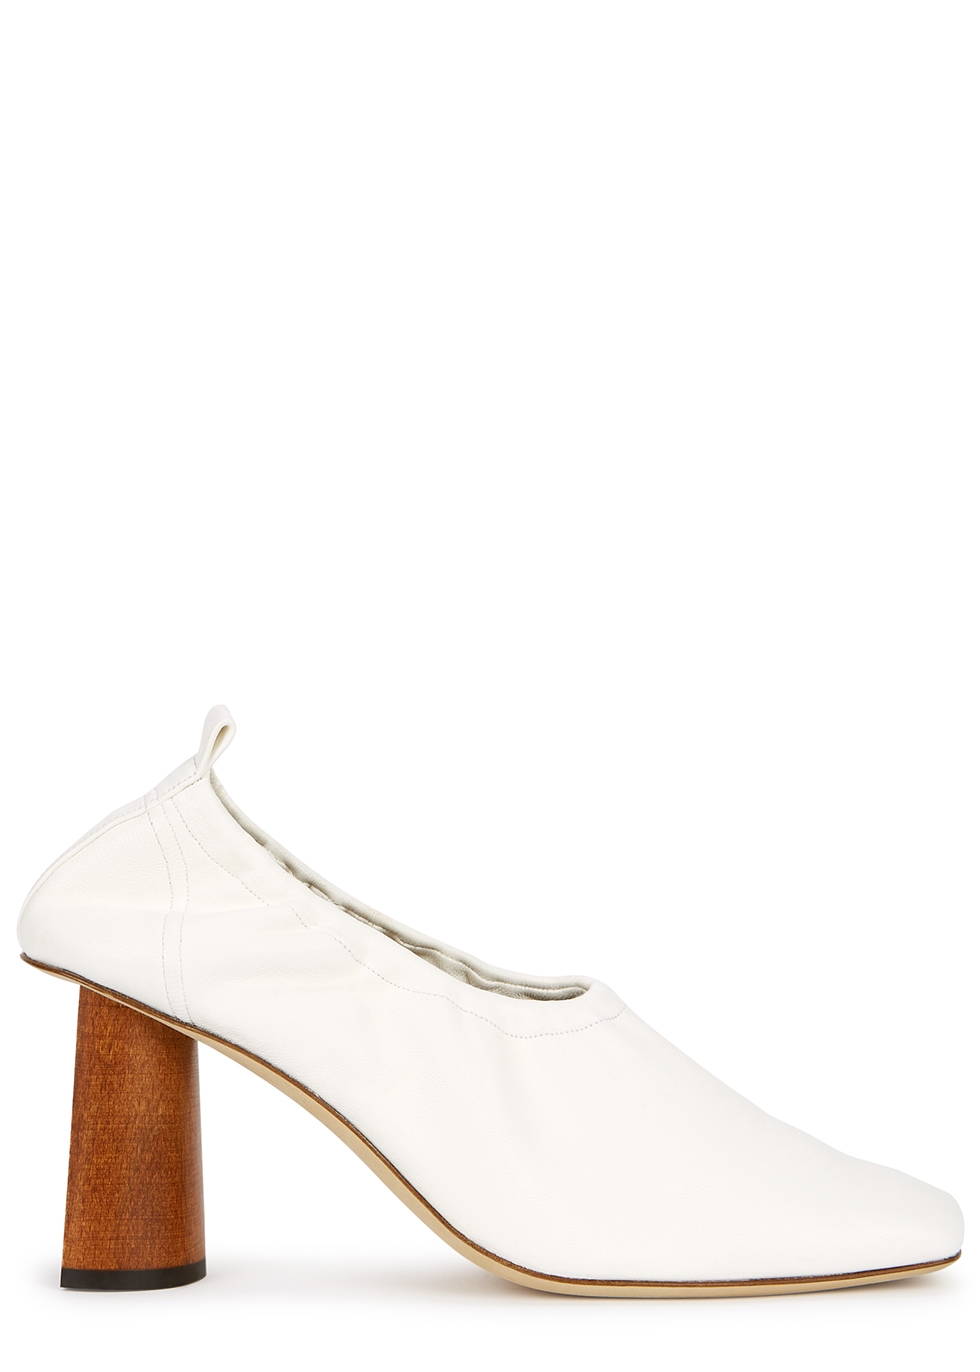 white leather pumps dress shoes